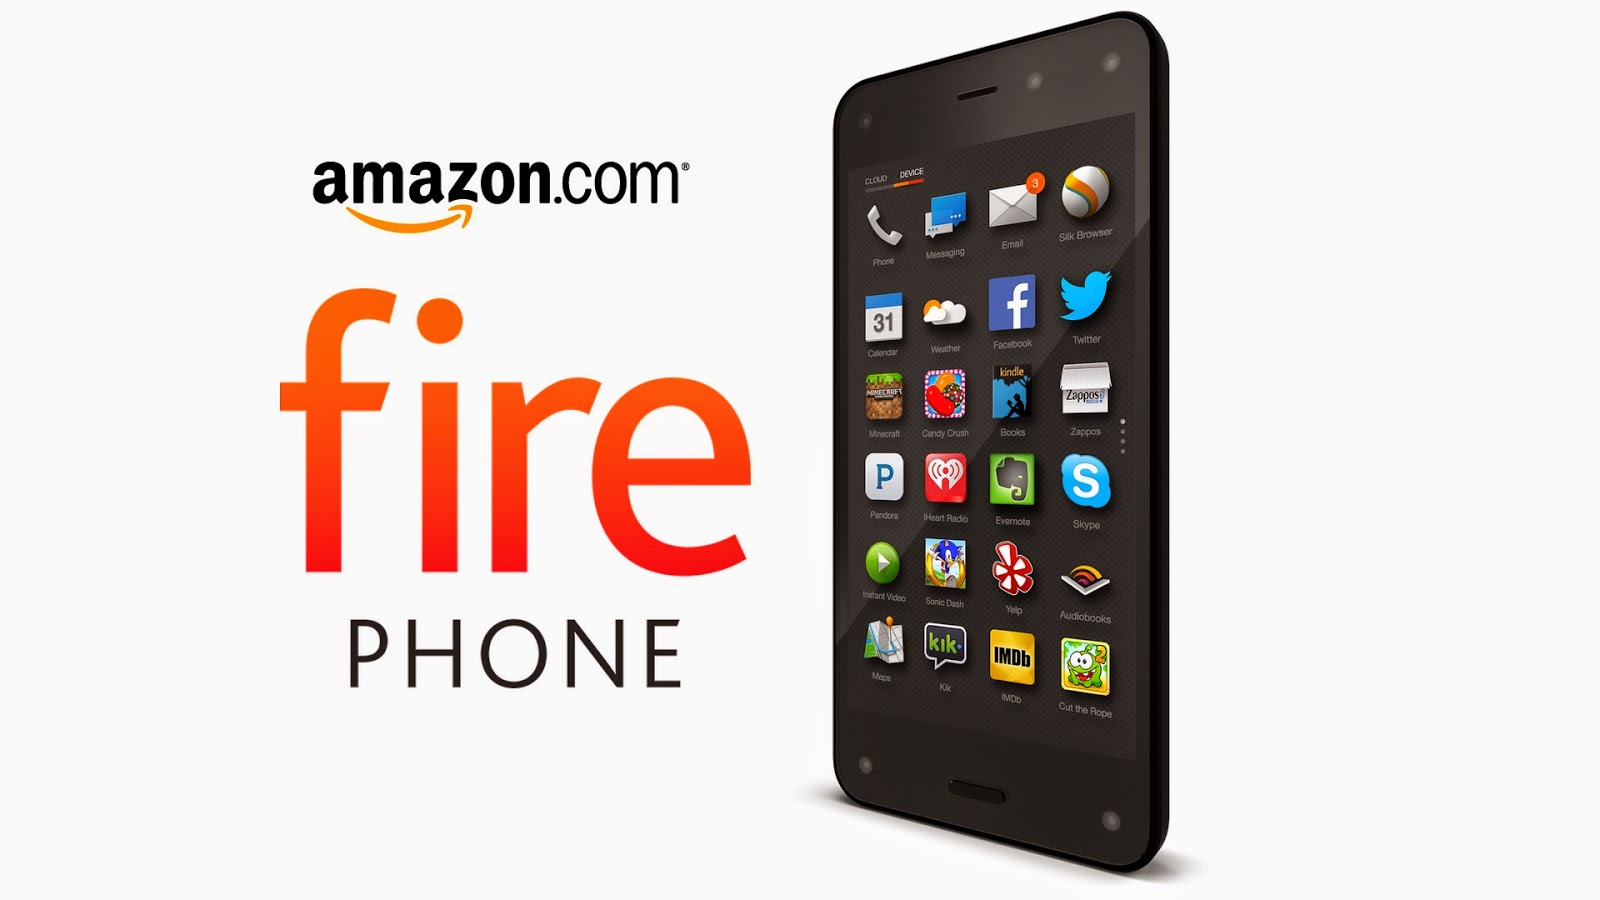 Fire Phone, Smartphone Terbaru dari Amazon